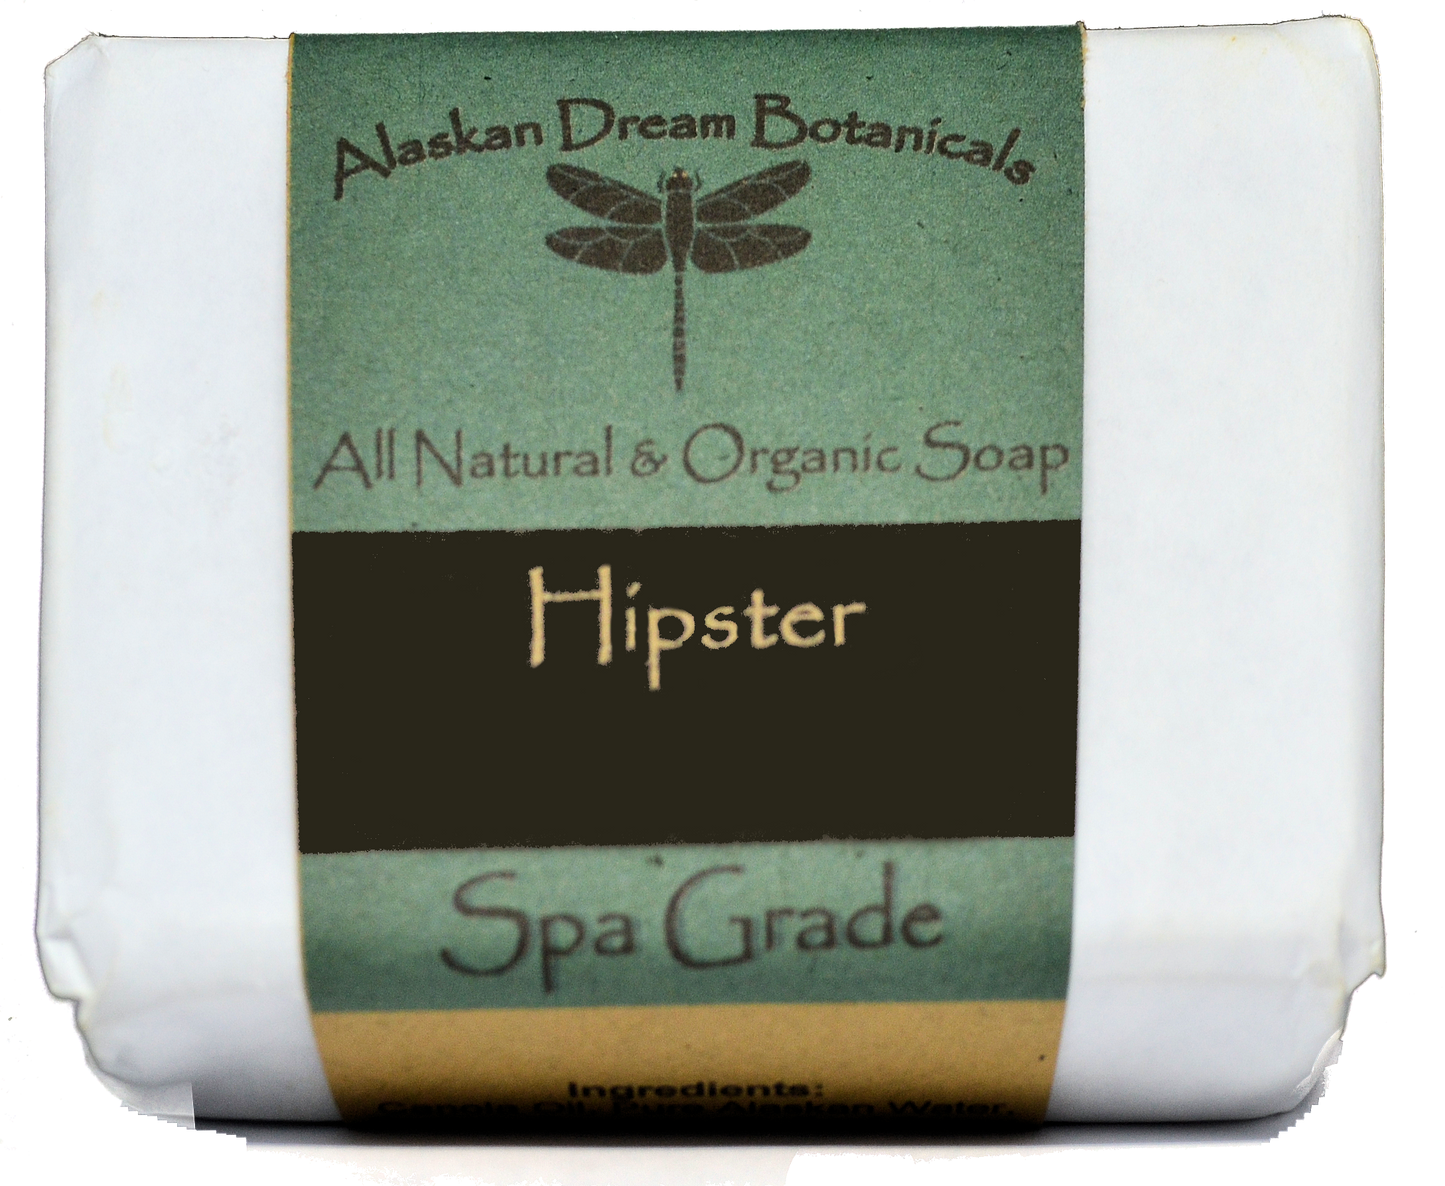 Hipster Spa Grade Bar Soap - Alaskan Dream Botanicals